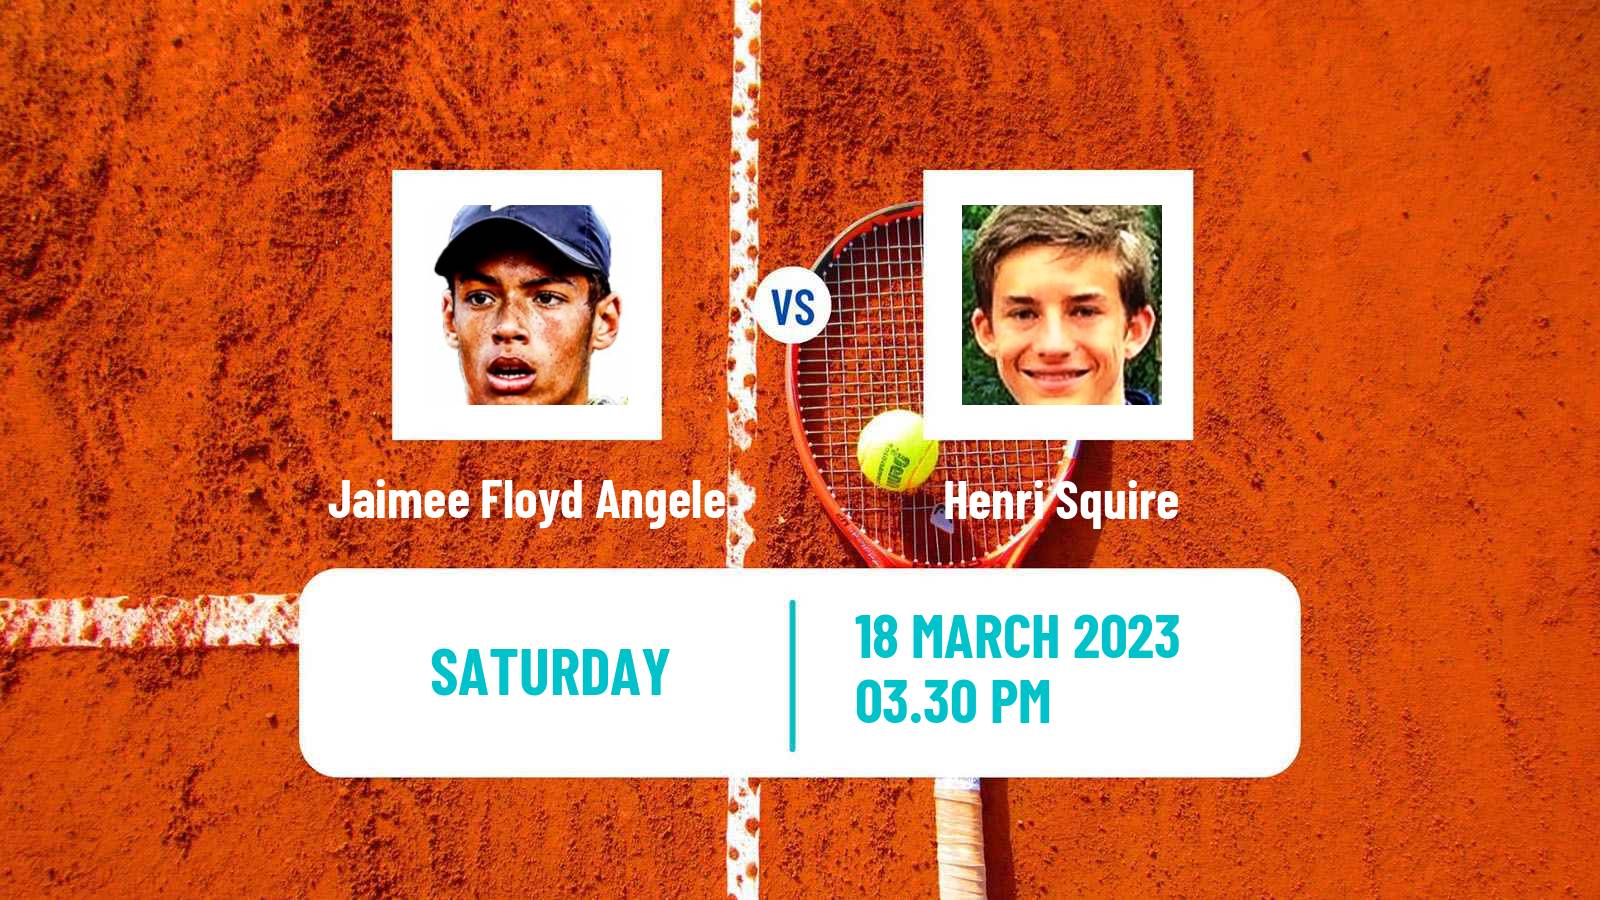 Tennis ITF Tournaments Jaimee Floyd Angele - Henri Squire